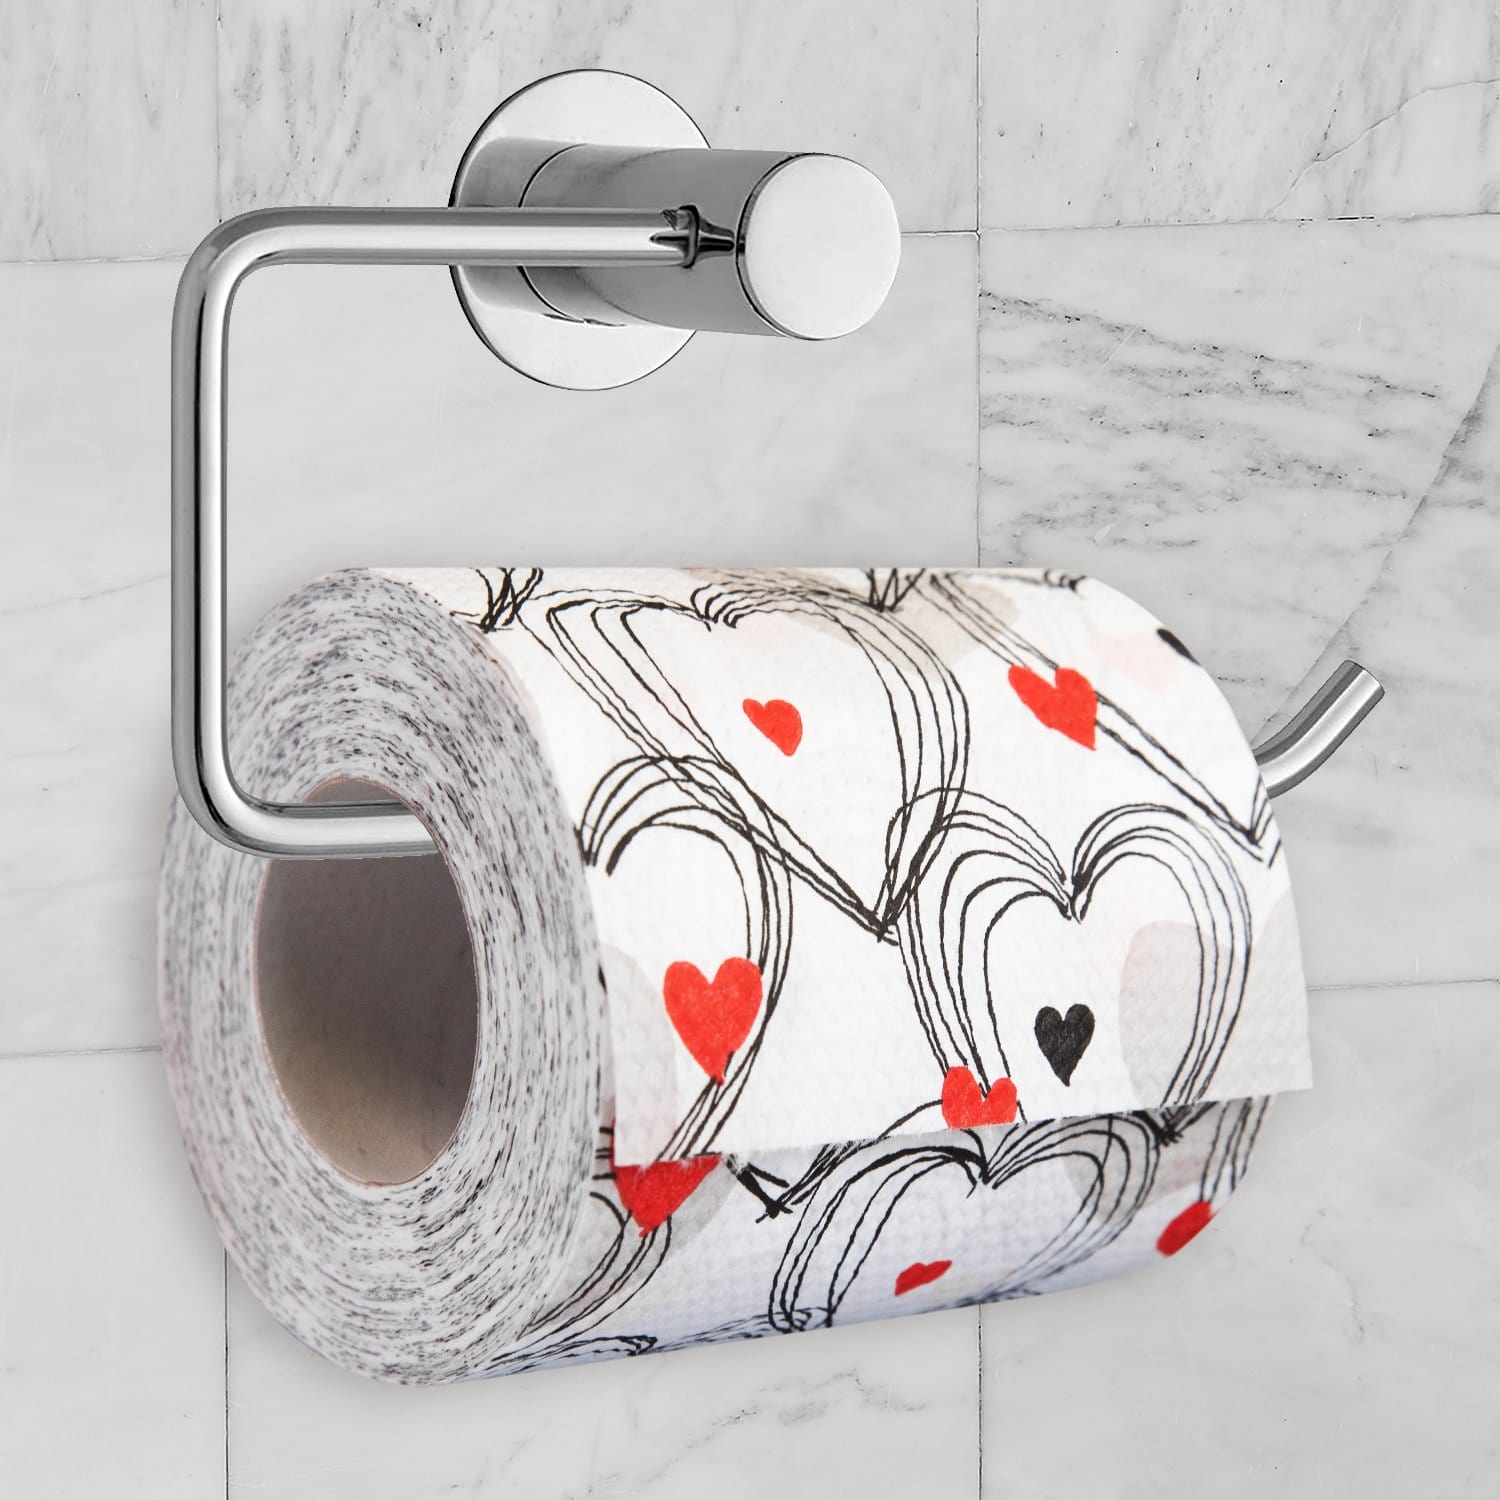 Toilettenpapier - Herzen